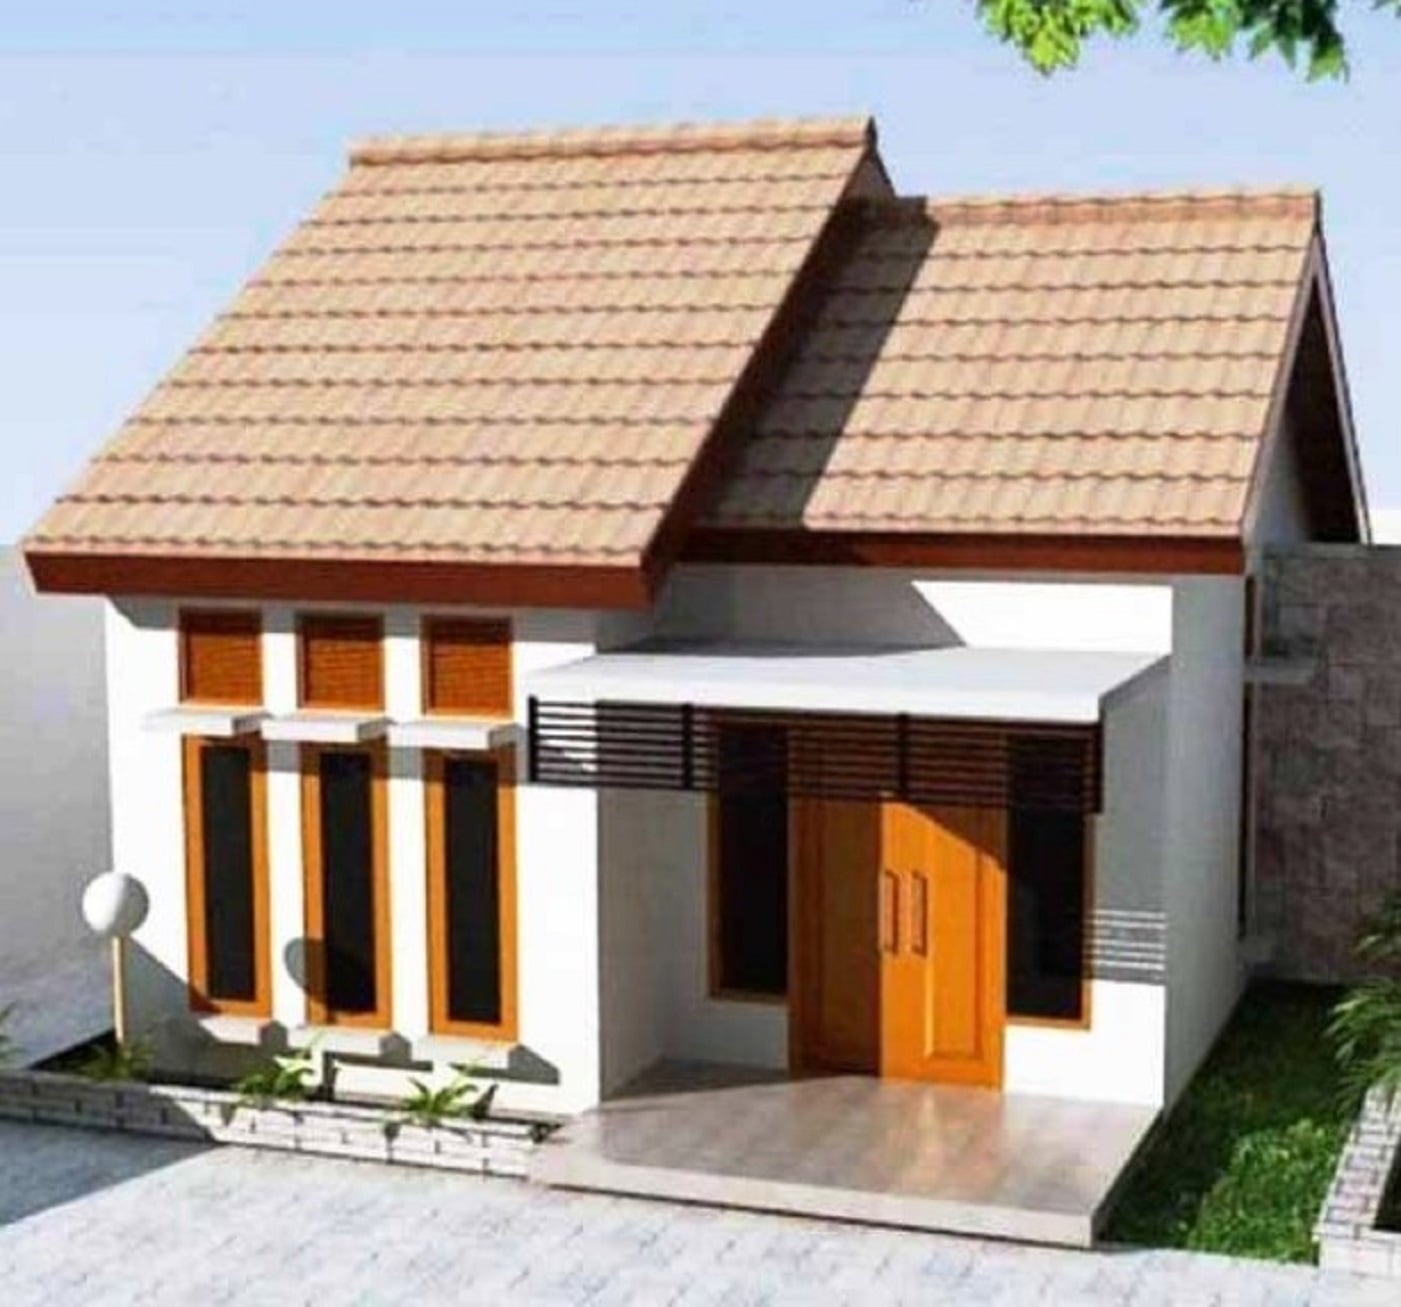 Desain Rumah Minimalis Sederhana Ukuran Kecil Deagam Design